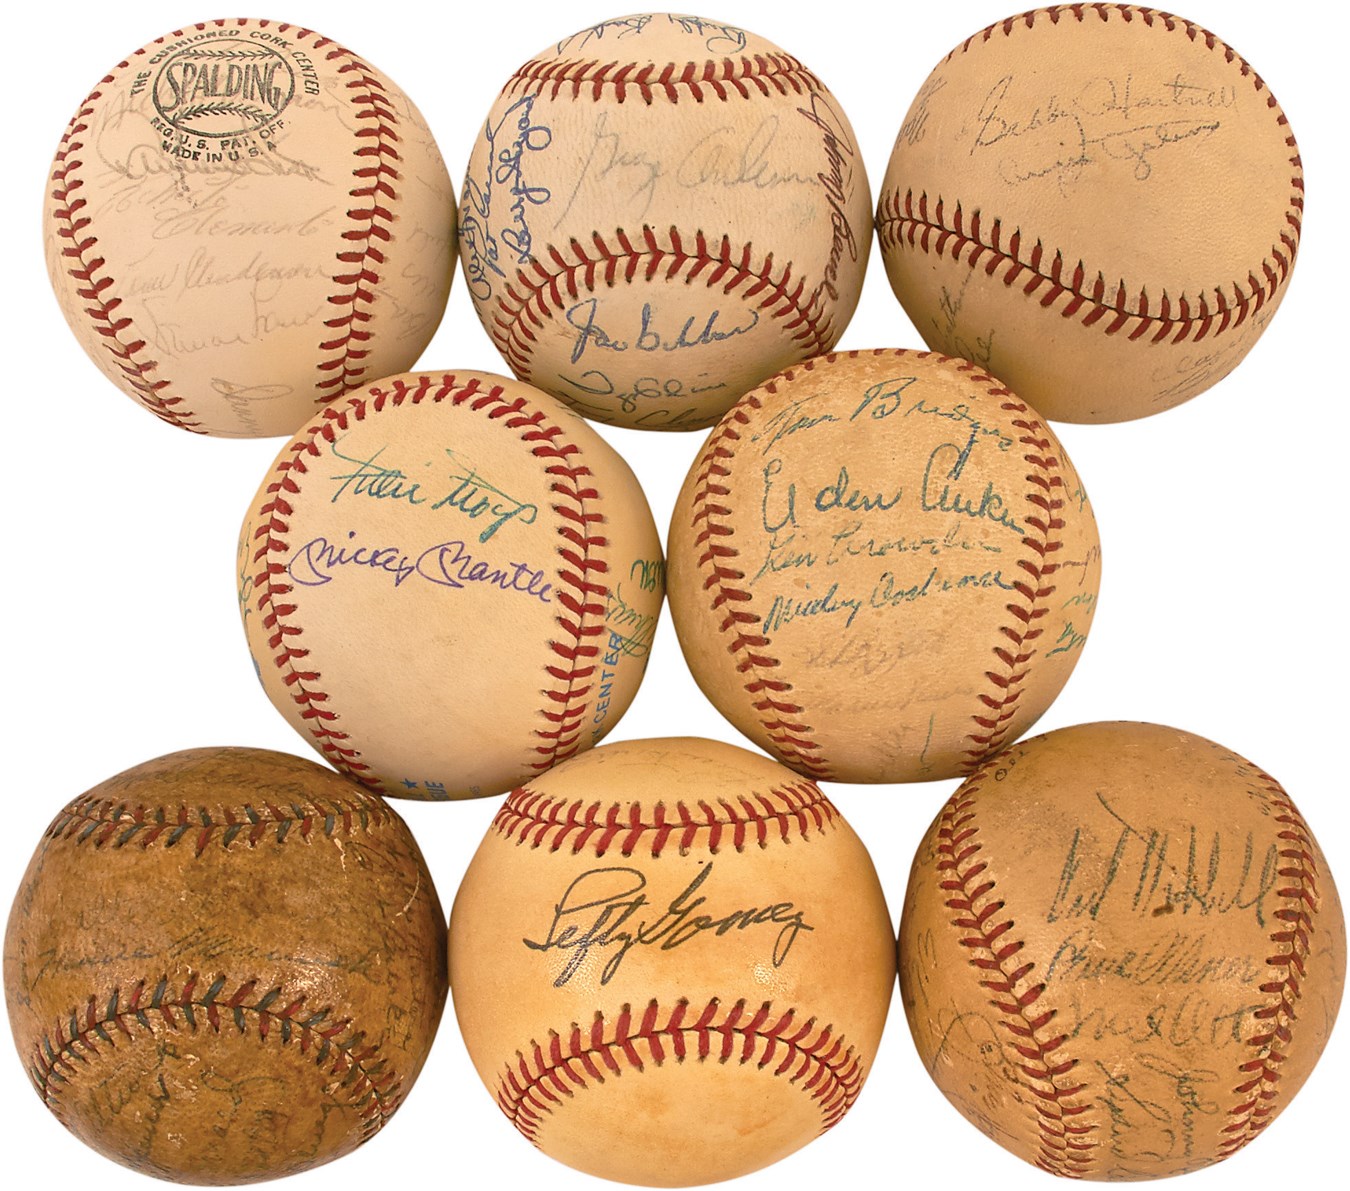 Baseball Autographs - Legendary Baseball Autograph Collection with Walter Johnson, Ott & Clemente (8)